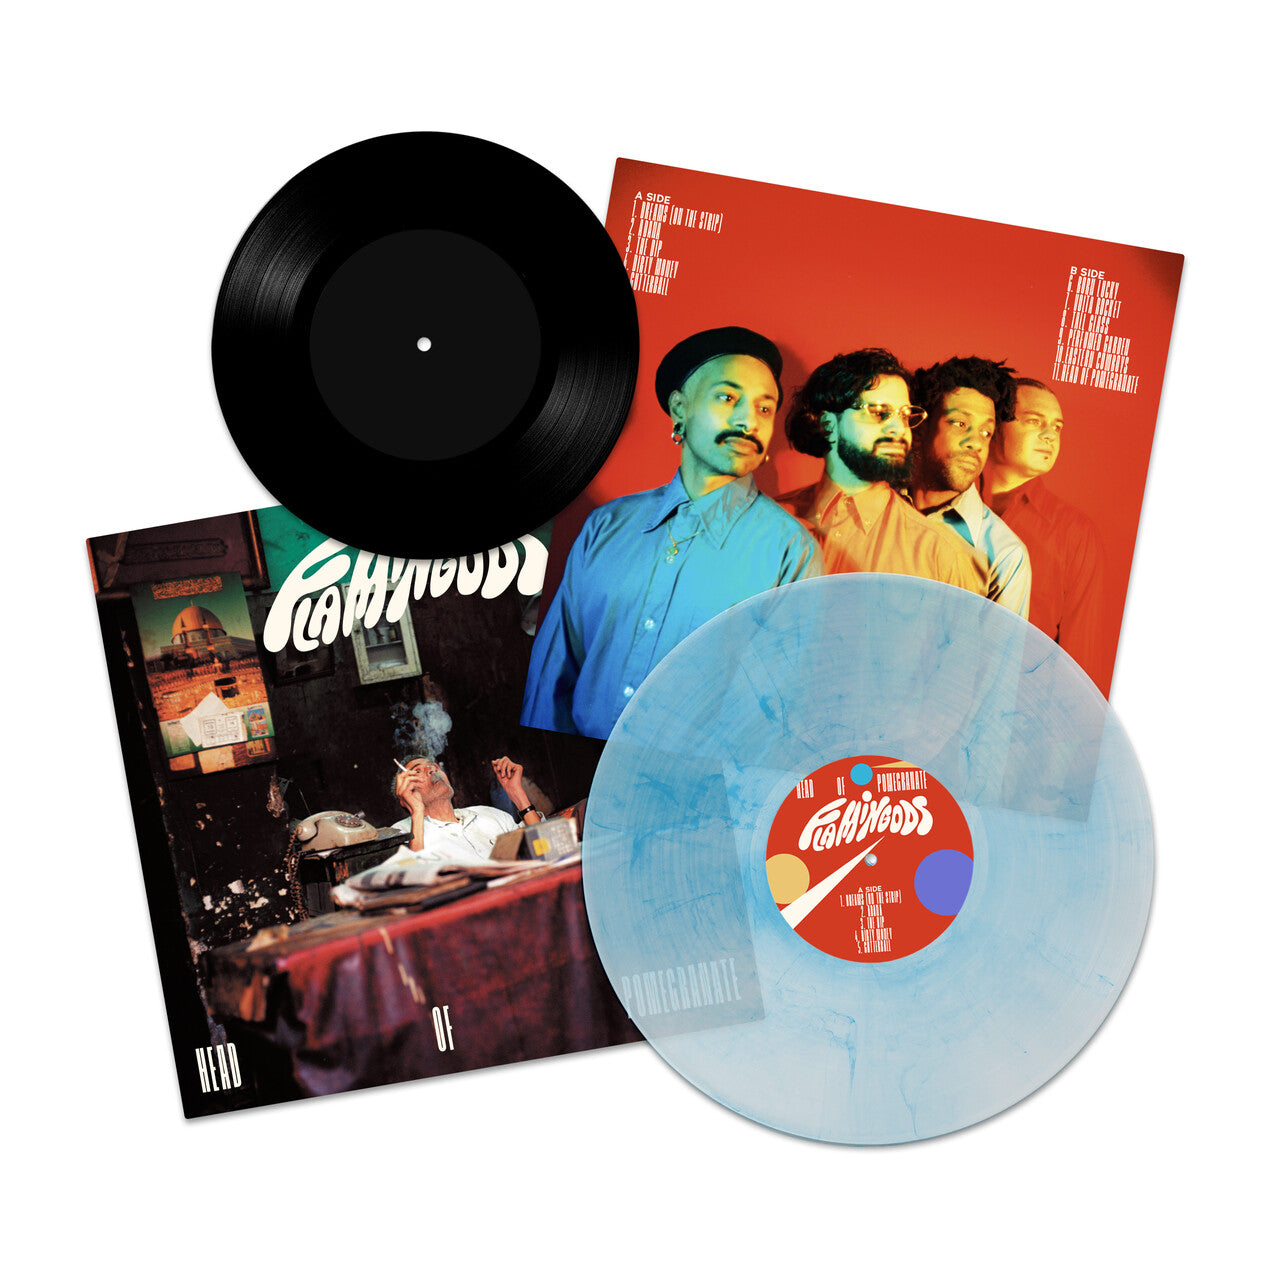 Flamingods - Head Of Pomegranate: Deluxe Edition Island Haze Colour Vinyl LP, Bonus 7" Single + Signed Art Print